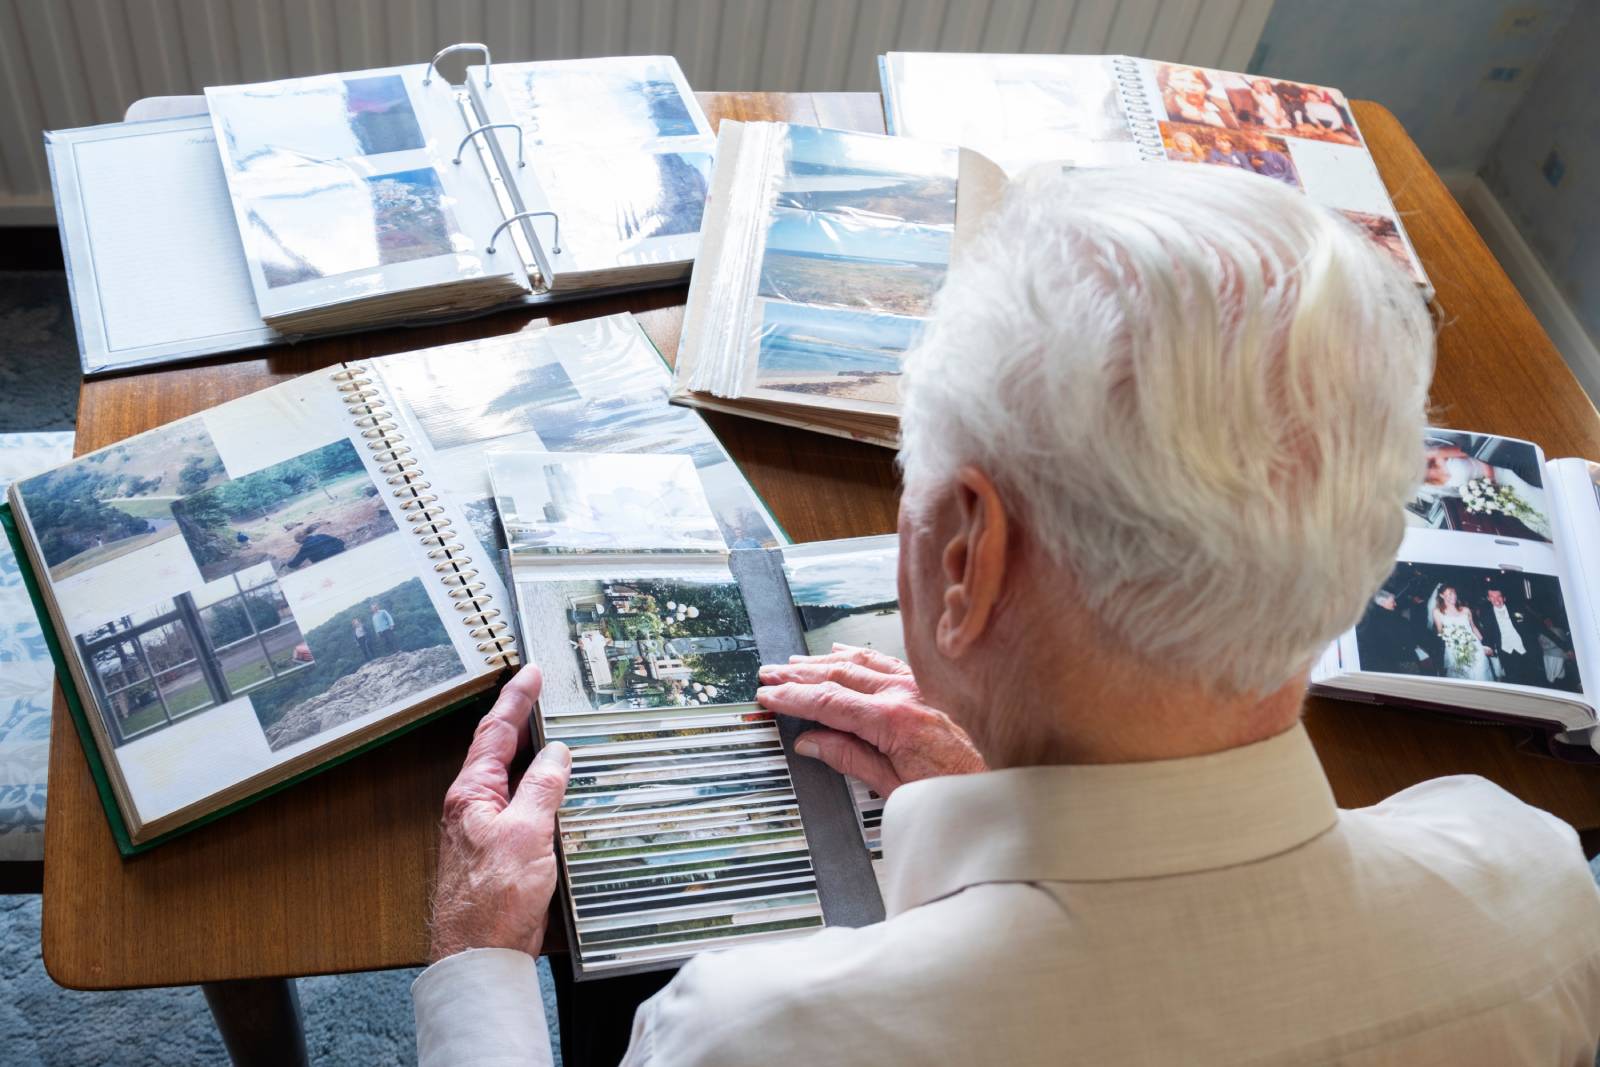 Senior with dementia looking through family photo albums.